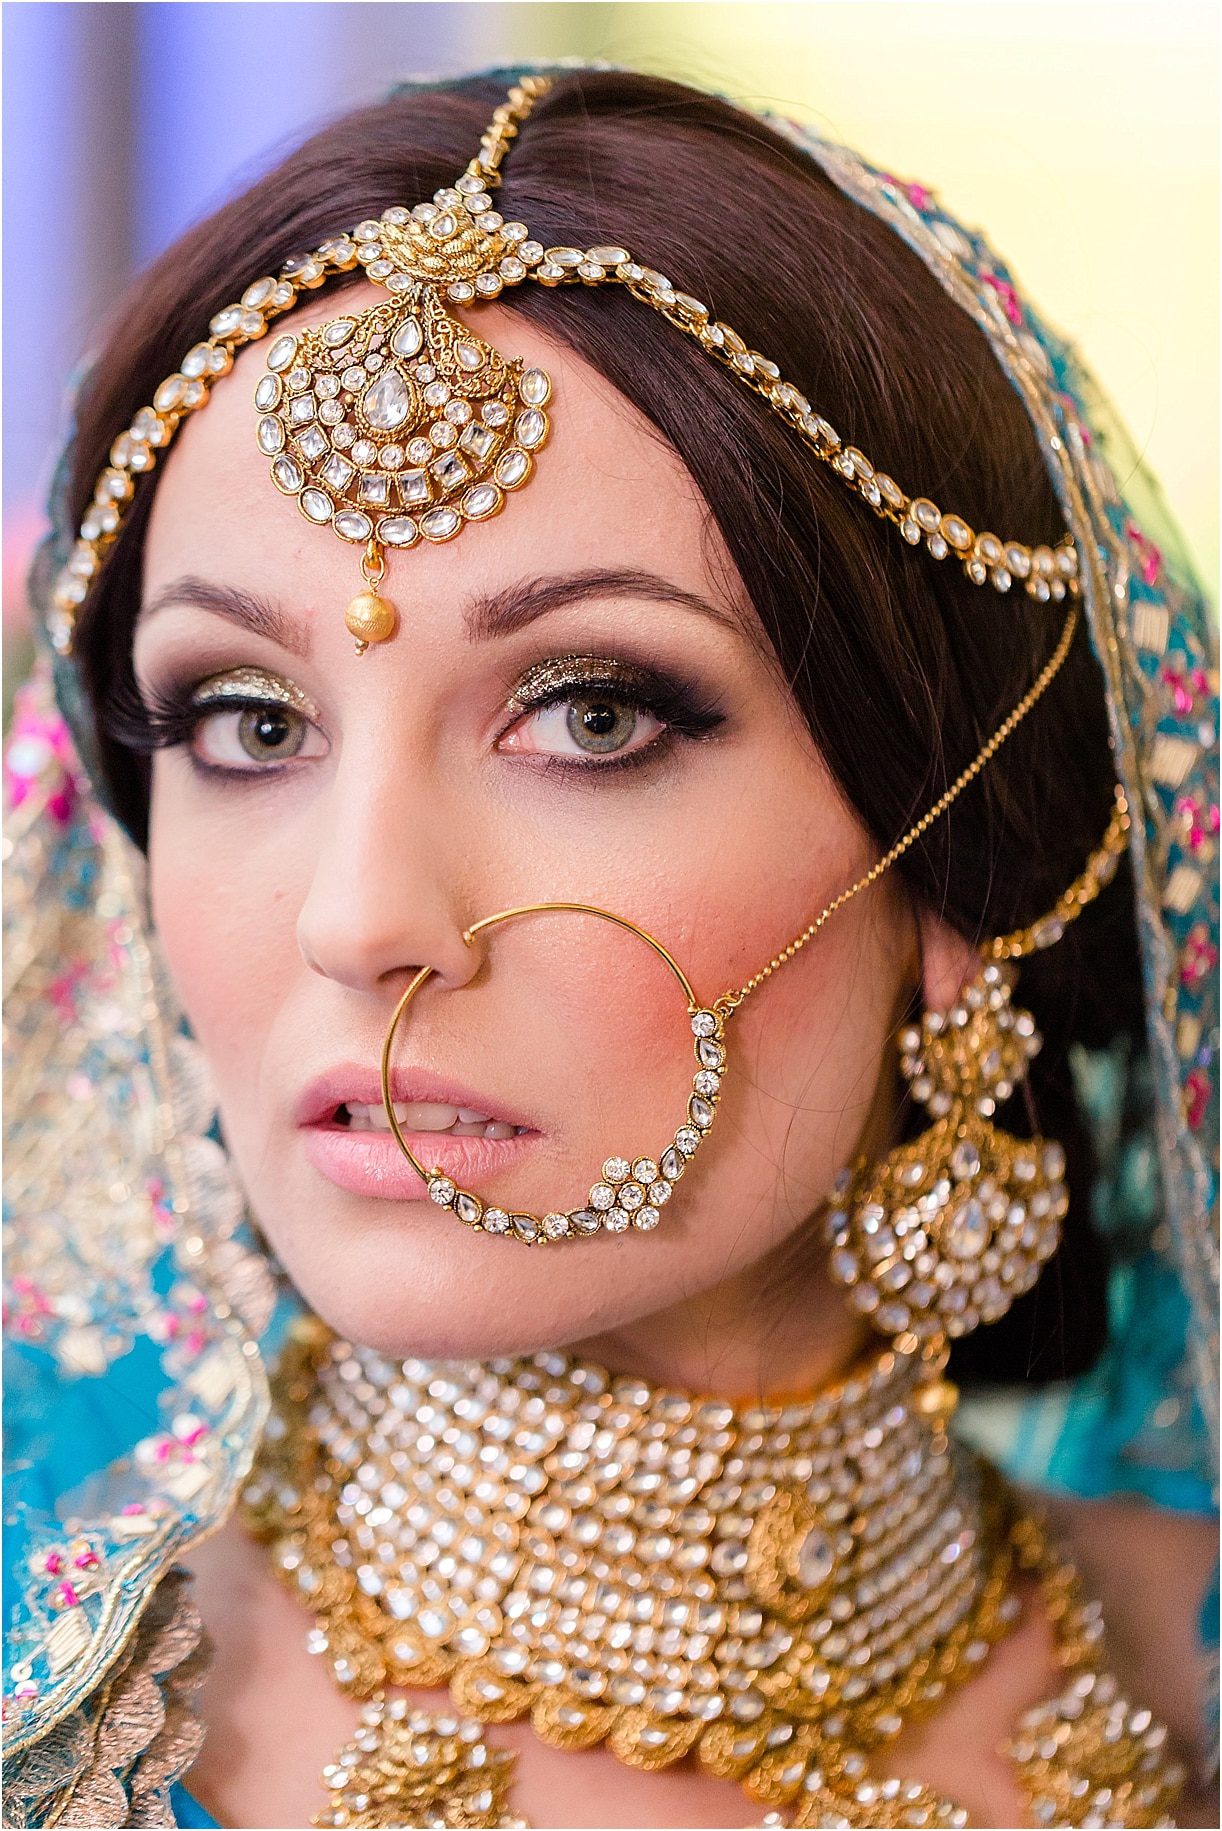 Middle Eastern Wedding | Hill City Bride Virginia Wedding Blog Travel Destination - makeup